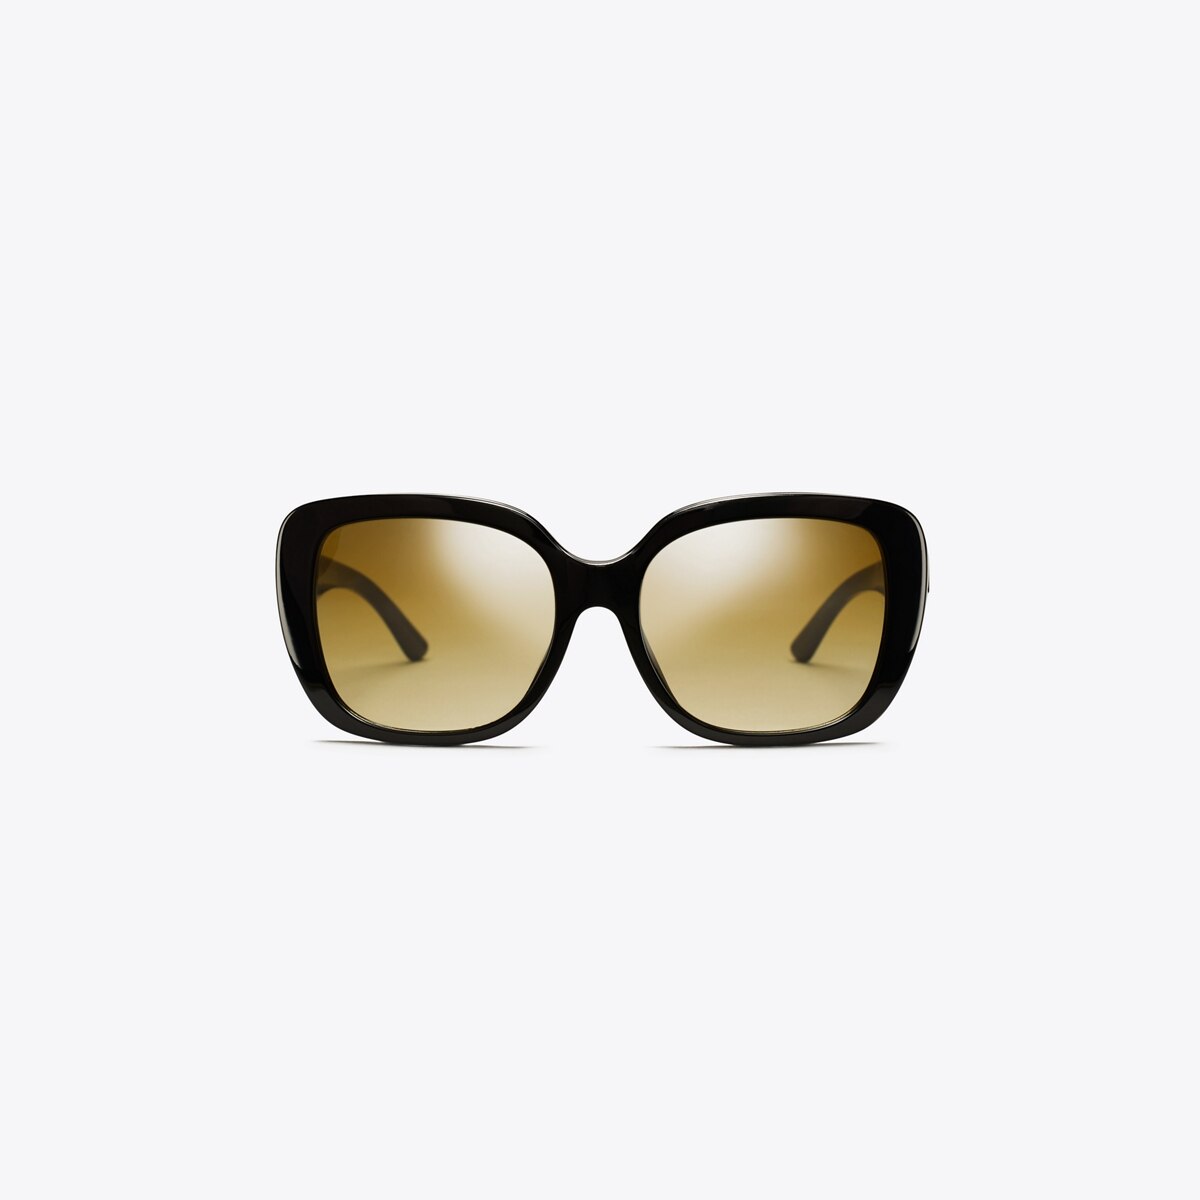 Fleming Sunglasses : Women's Designer Sunglasses & Eyewear | Tory Burch